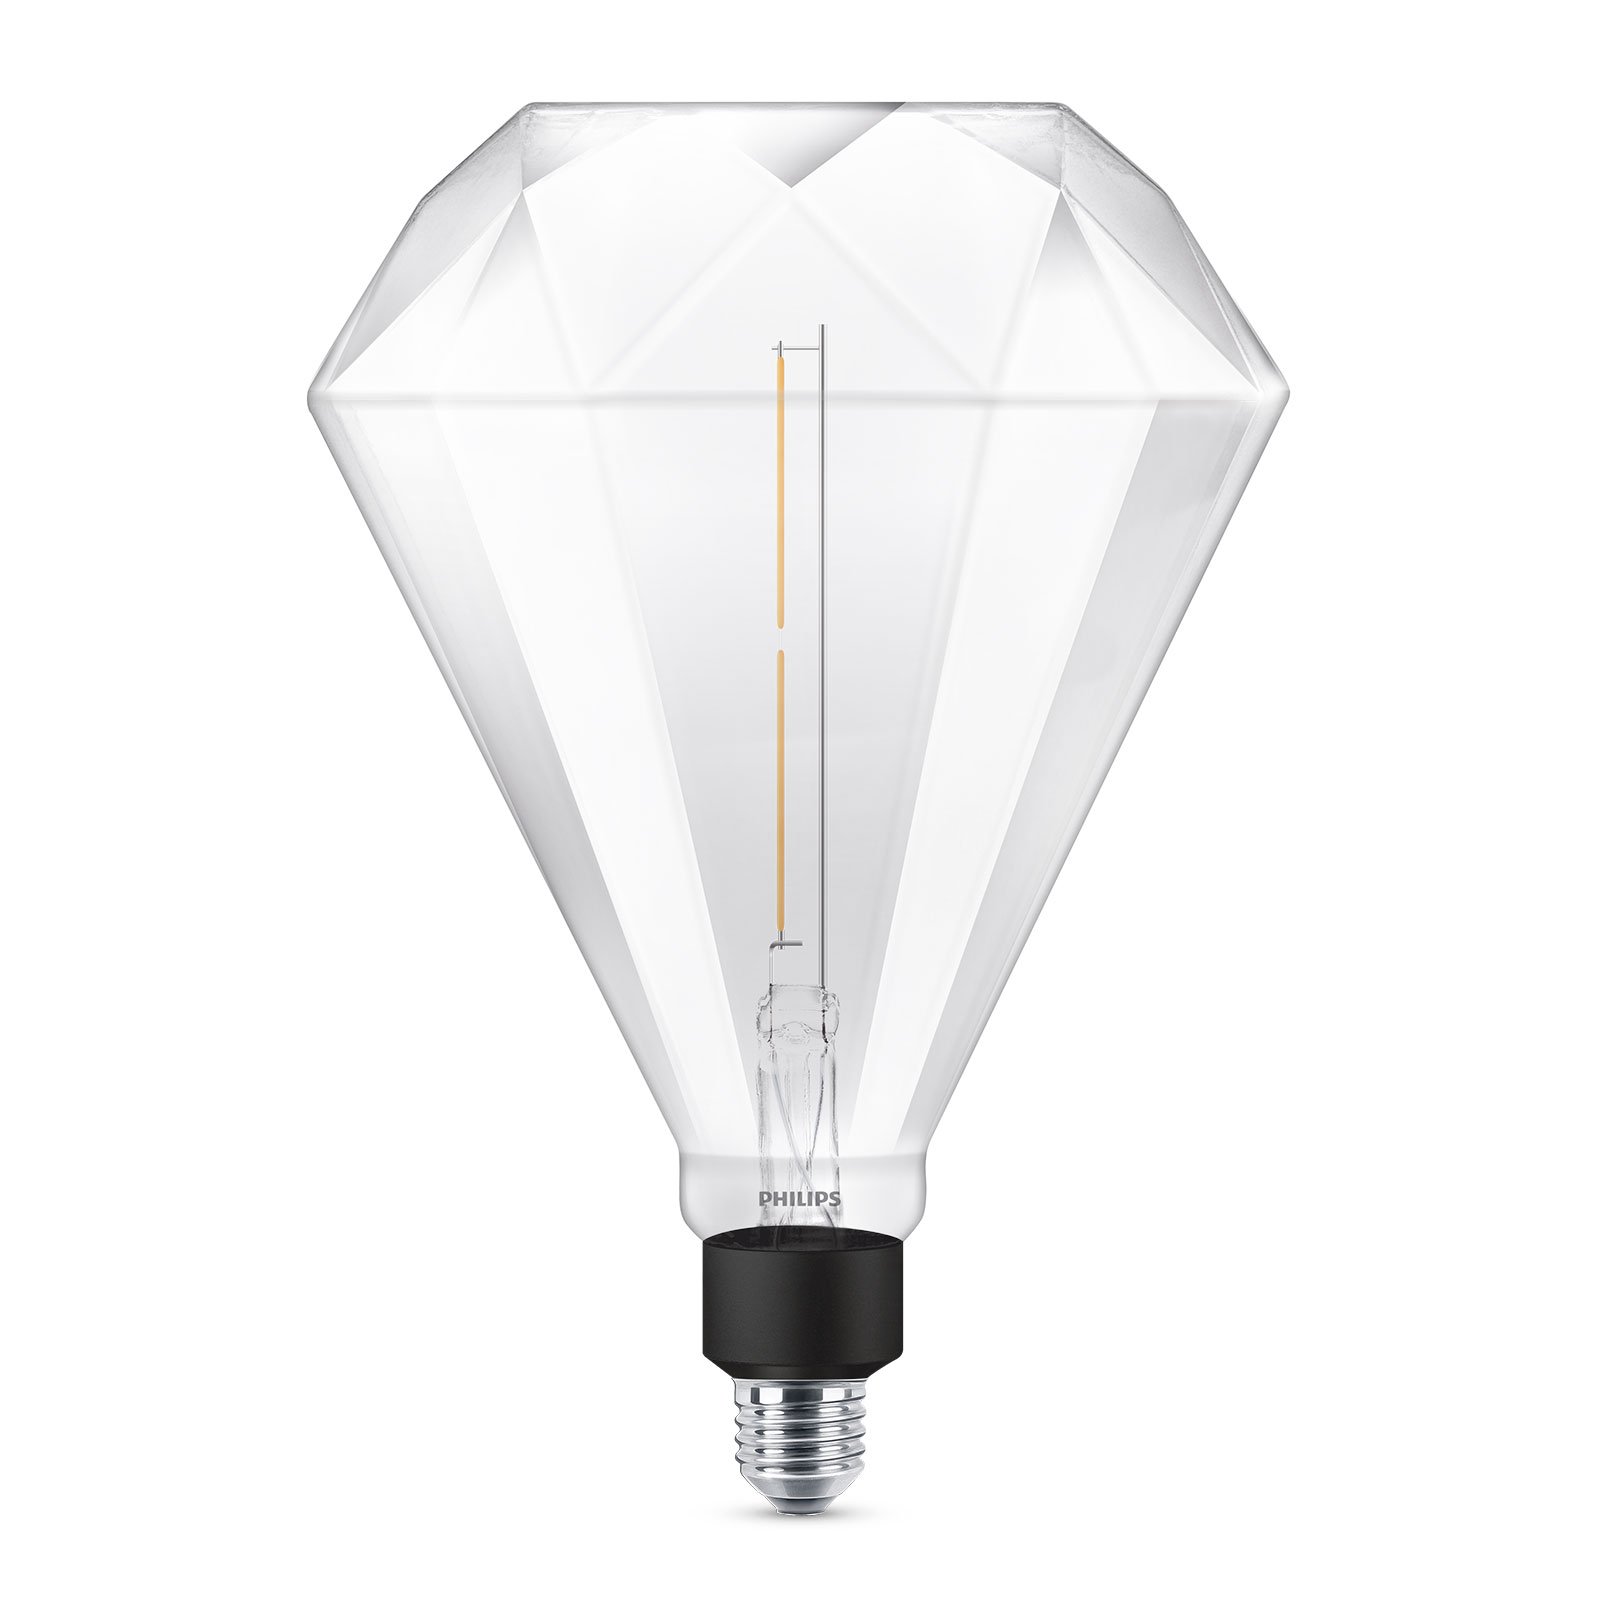 Philips Diamond giant LED lamp E27 4W